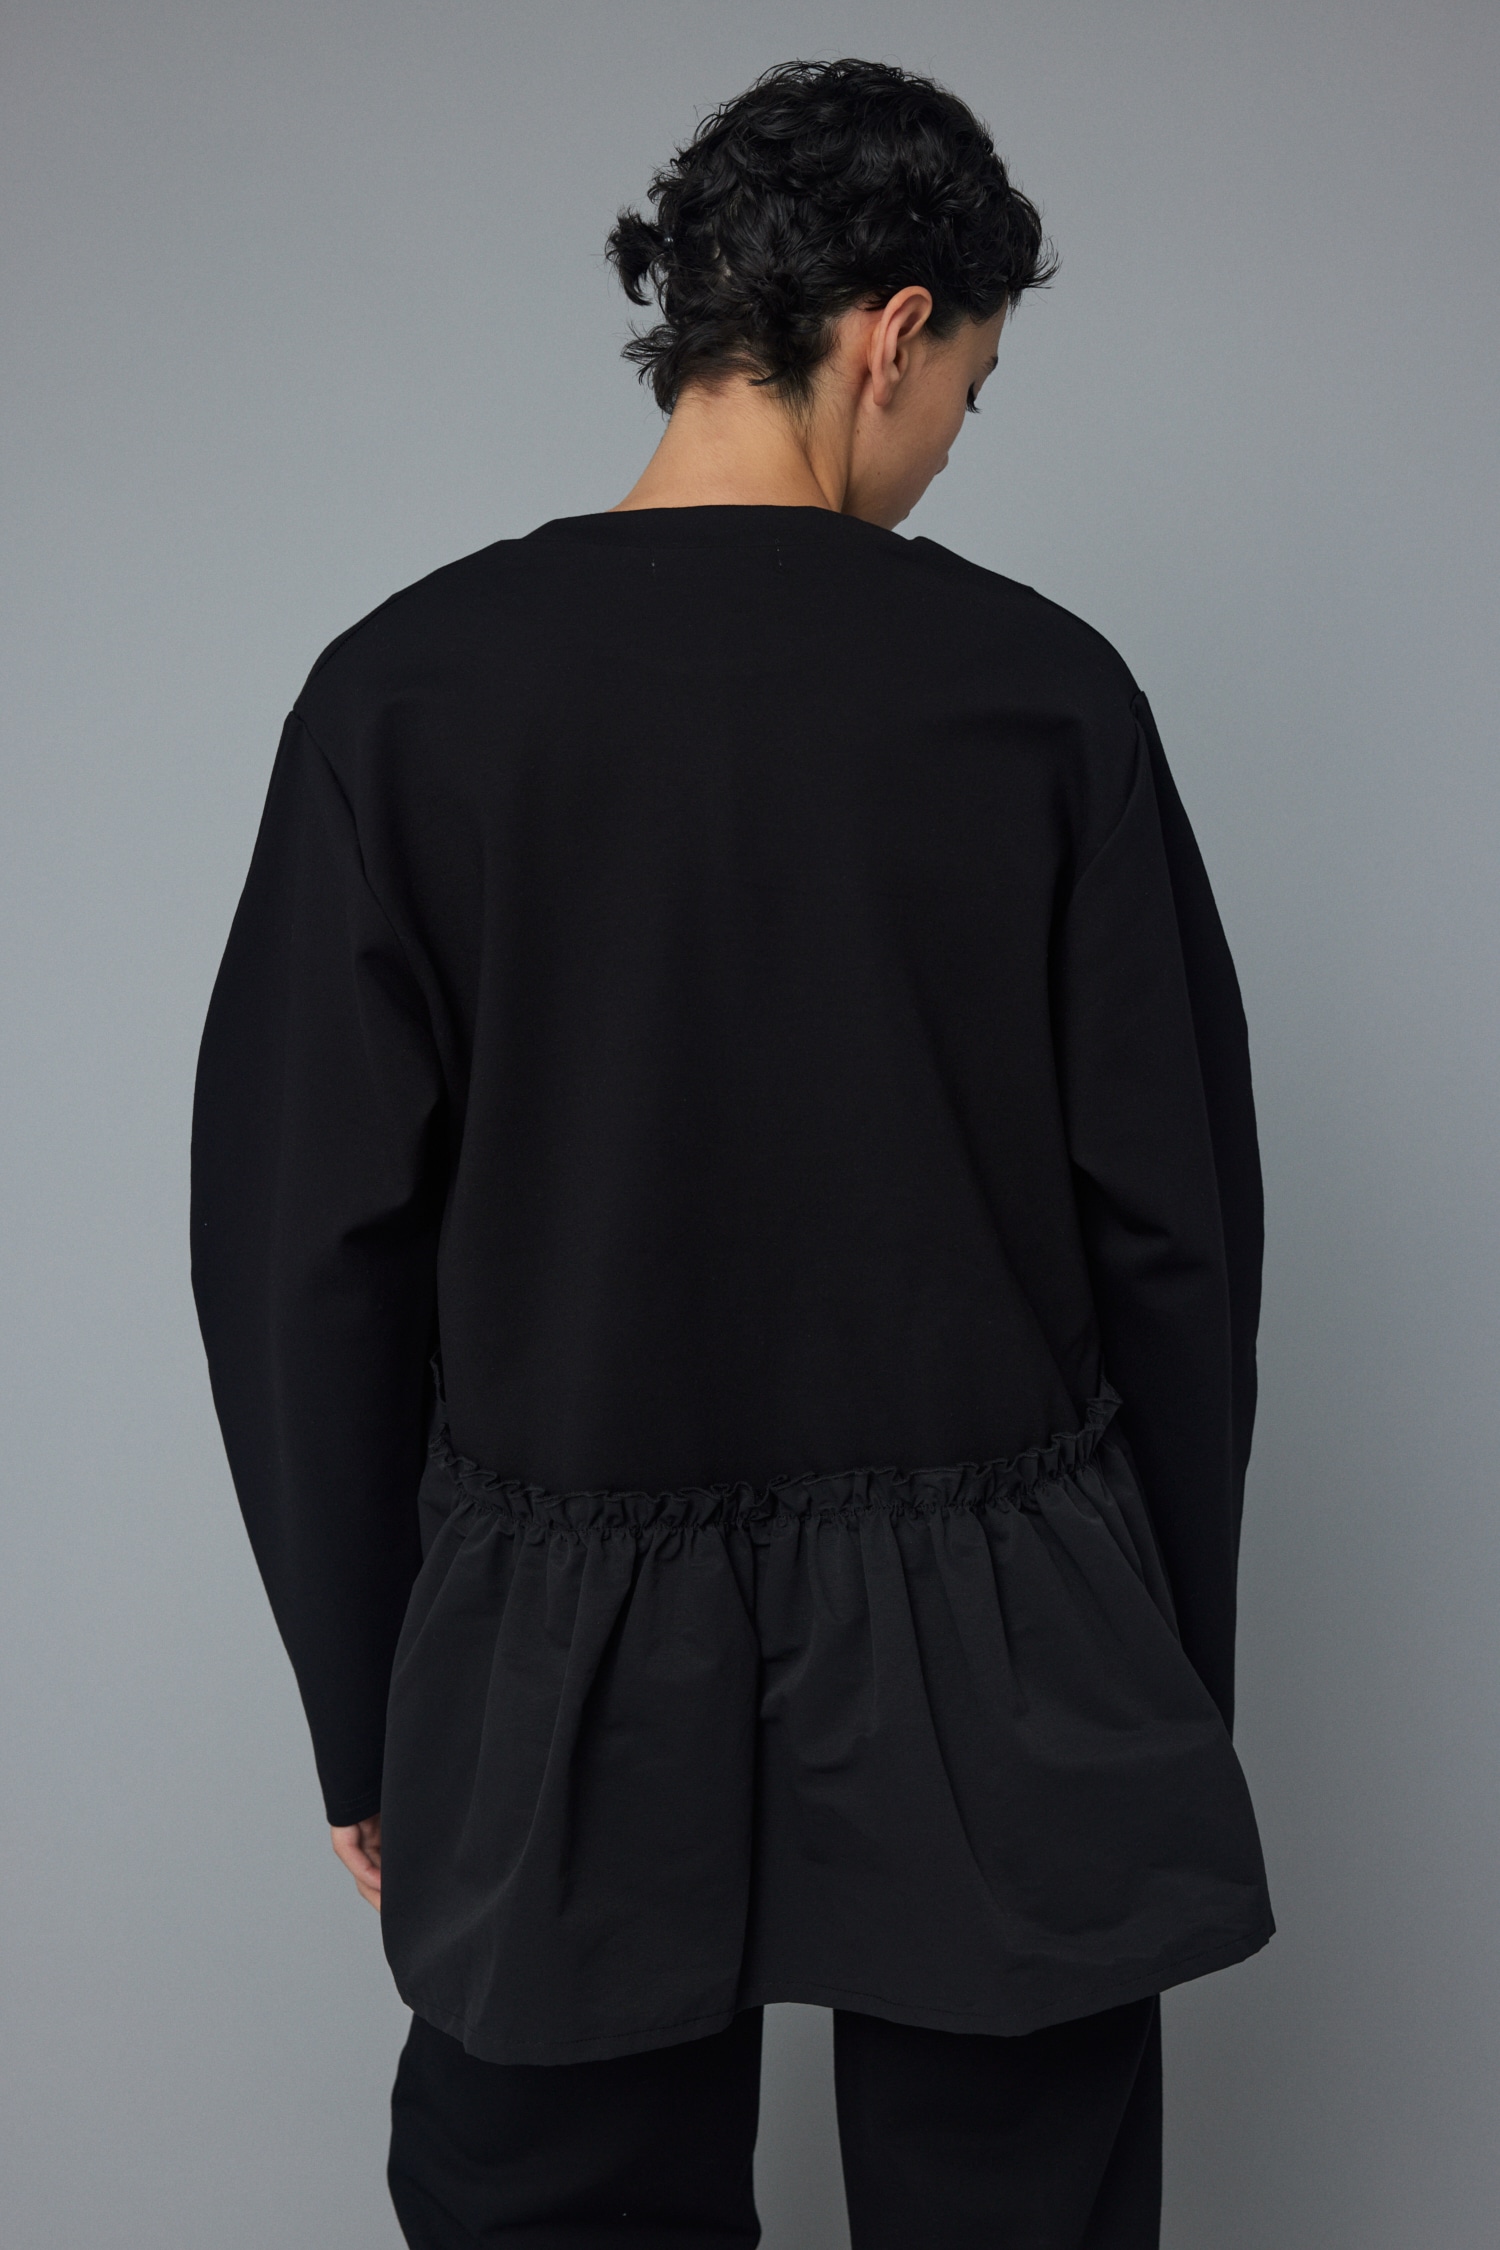 HeRIN.CYE | Ponte frill tops (Tシャツ・カットソー(長袖) ) |SHEL 